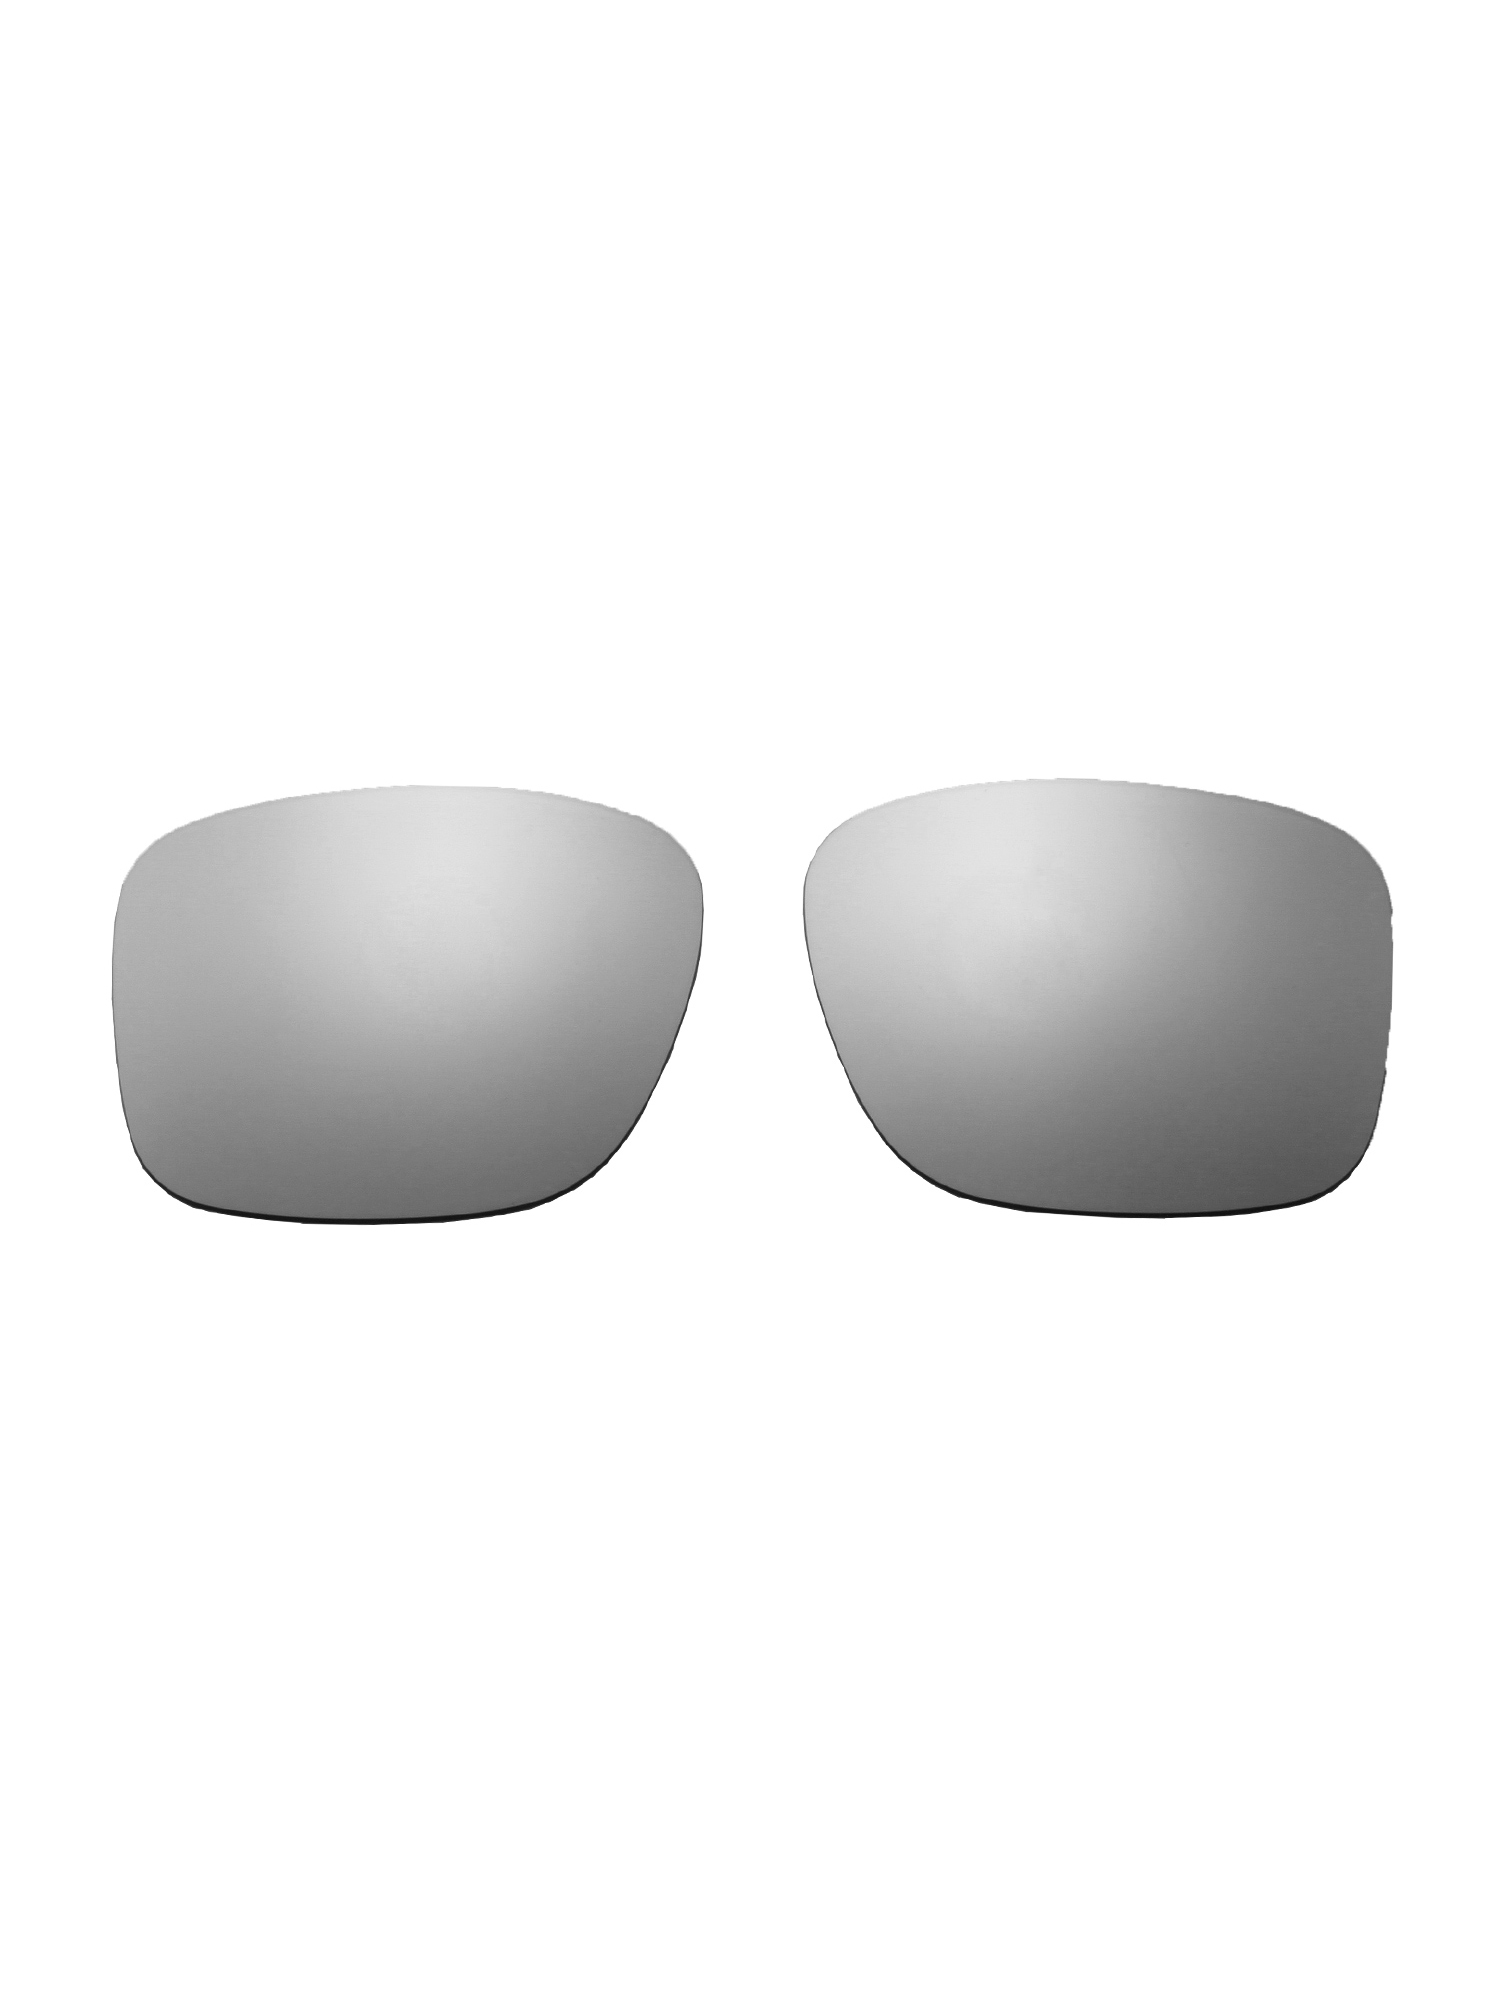 Walleva Polarized Titanium + Black Replacement Lenses For Oakley Latch SQ Sunglasses - image 2 of 6